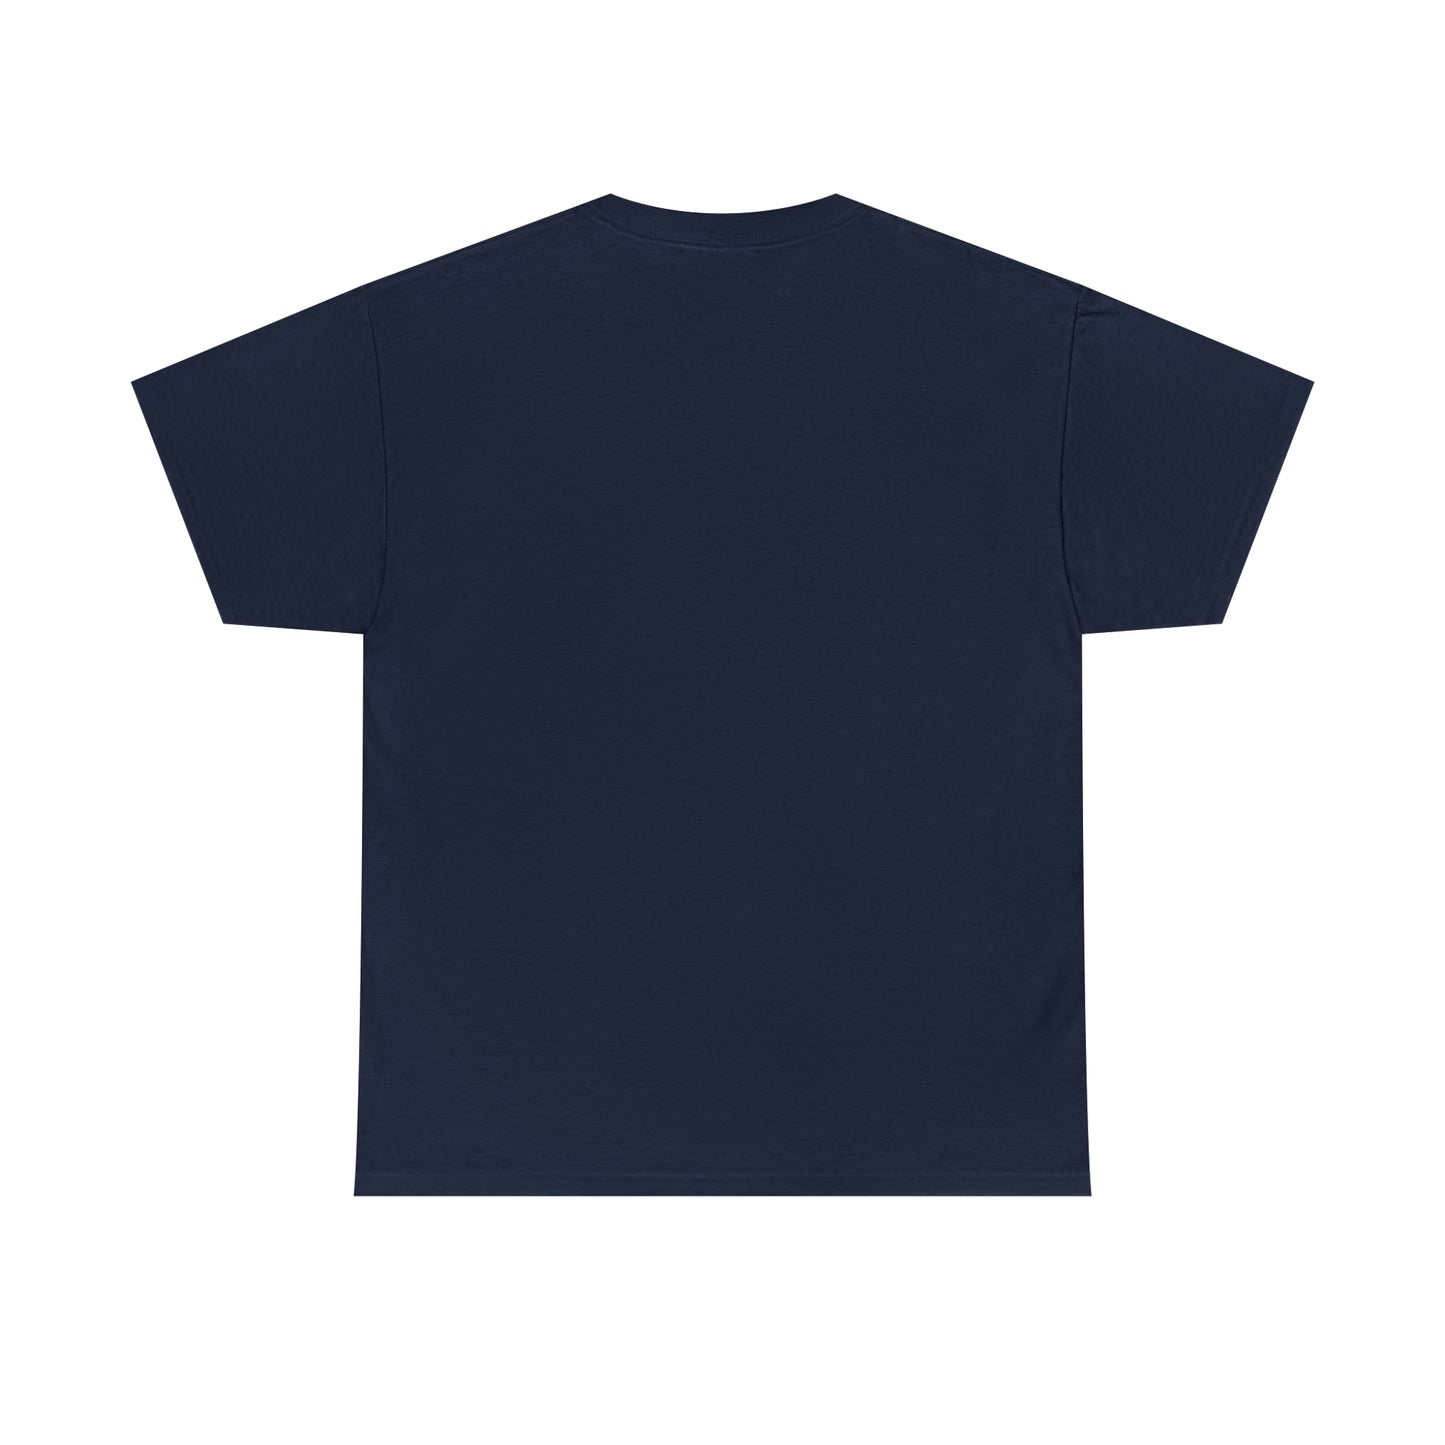 Nicaraguan Roots Design 4: Unisex T-Shirt